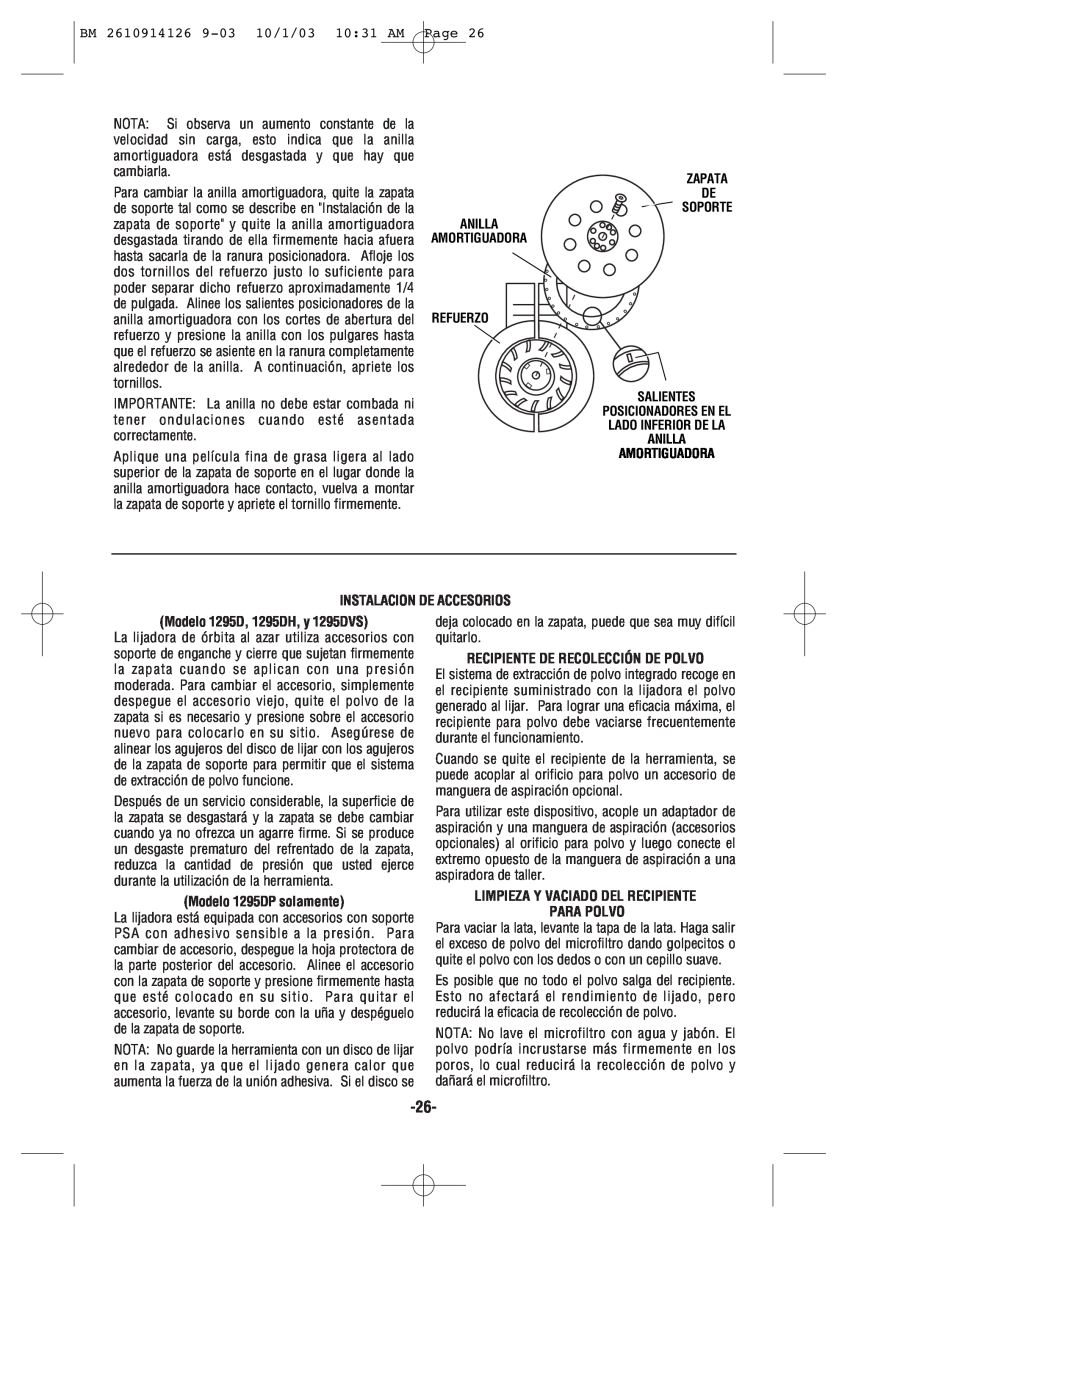 Bosch Power Tools manual Instalacion De Accesorios, Modelo 1295D, 1295DH, y 1295DVS, Modelo 1295DP solamente 